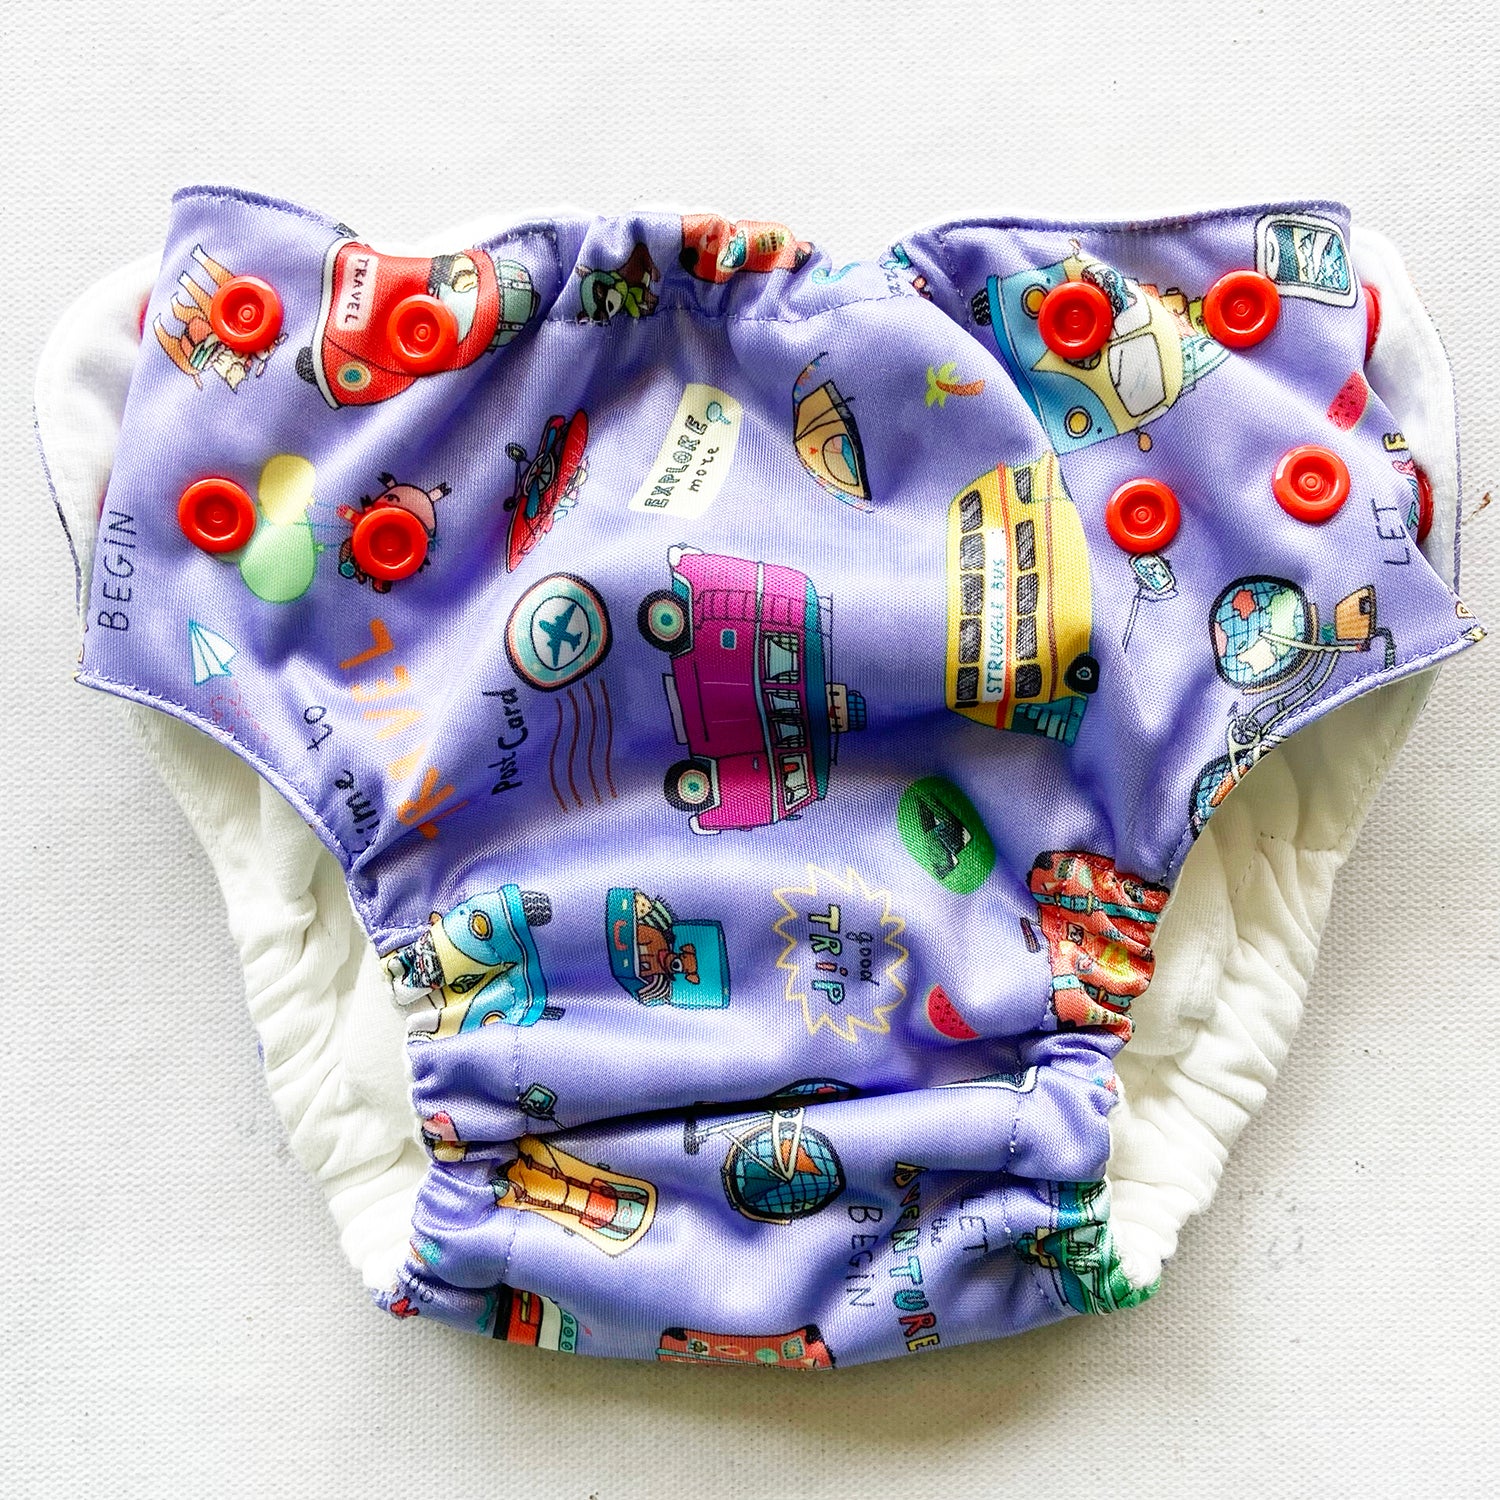 Buy Potty Training Pants Online Padded Underwear for Kids by Snugkins